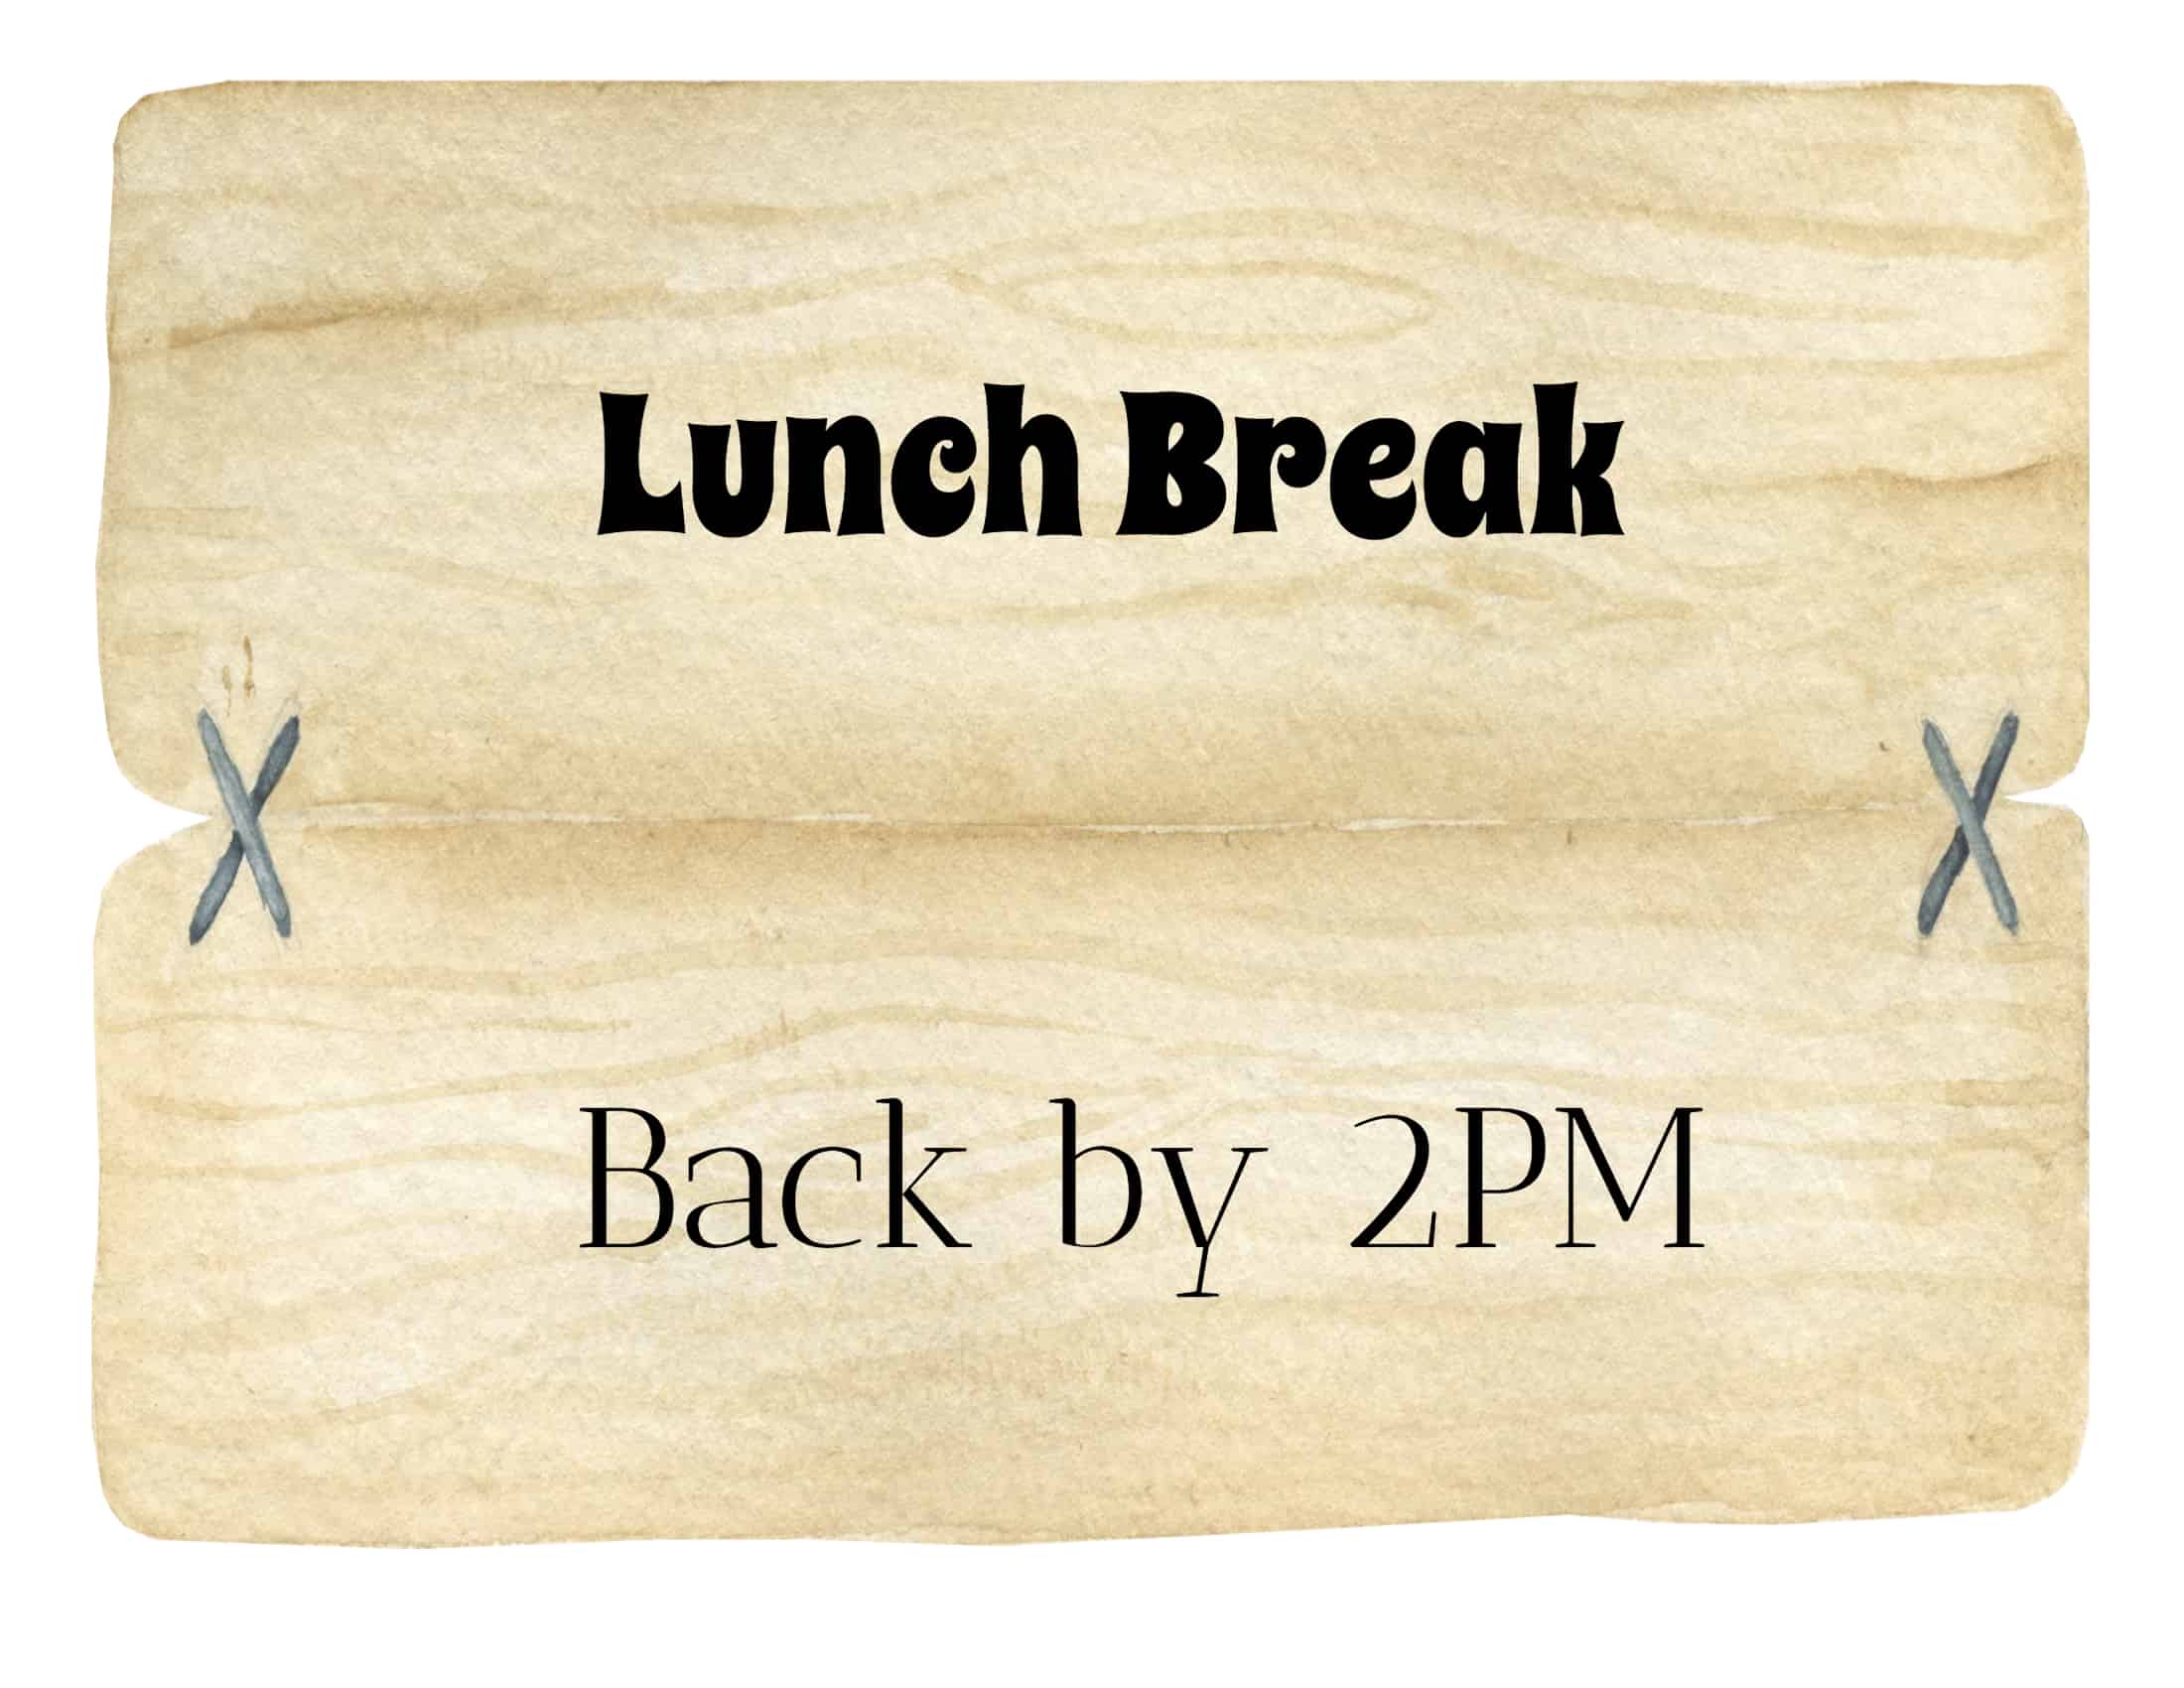 lunch break signage